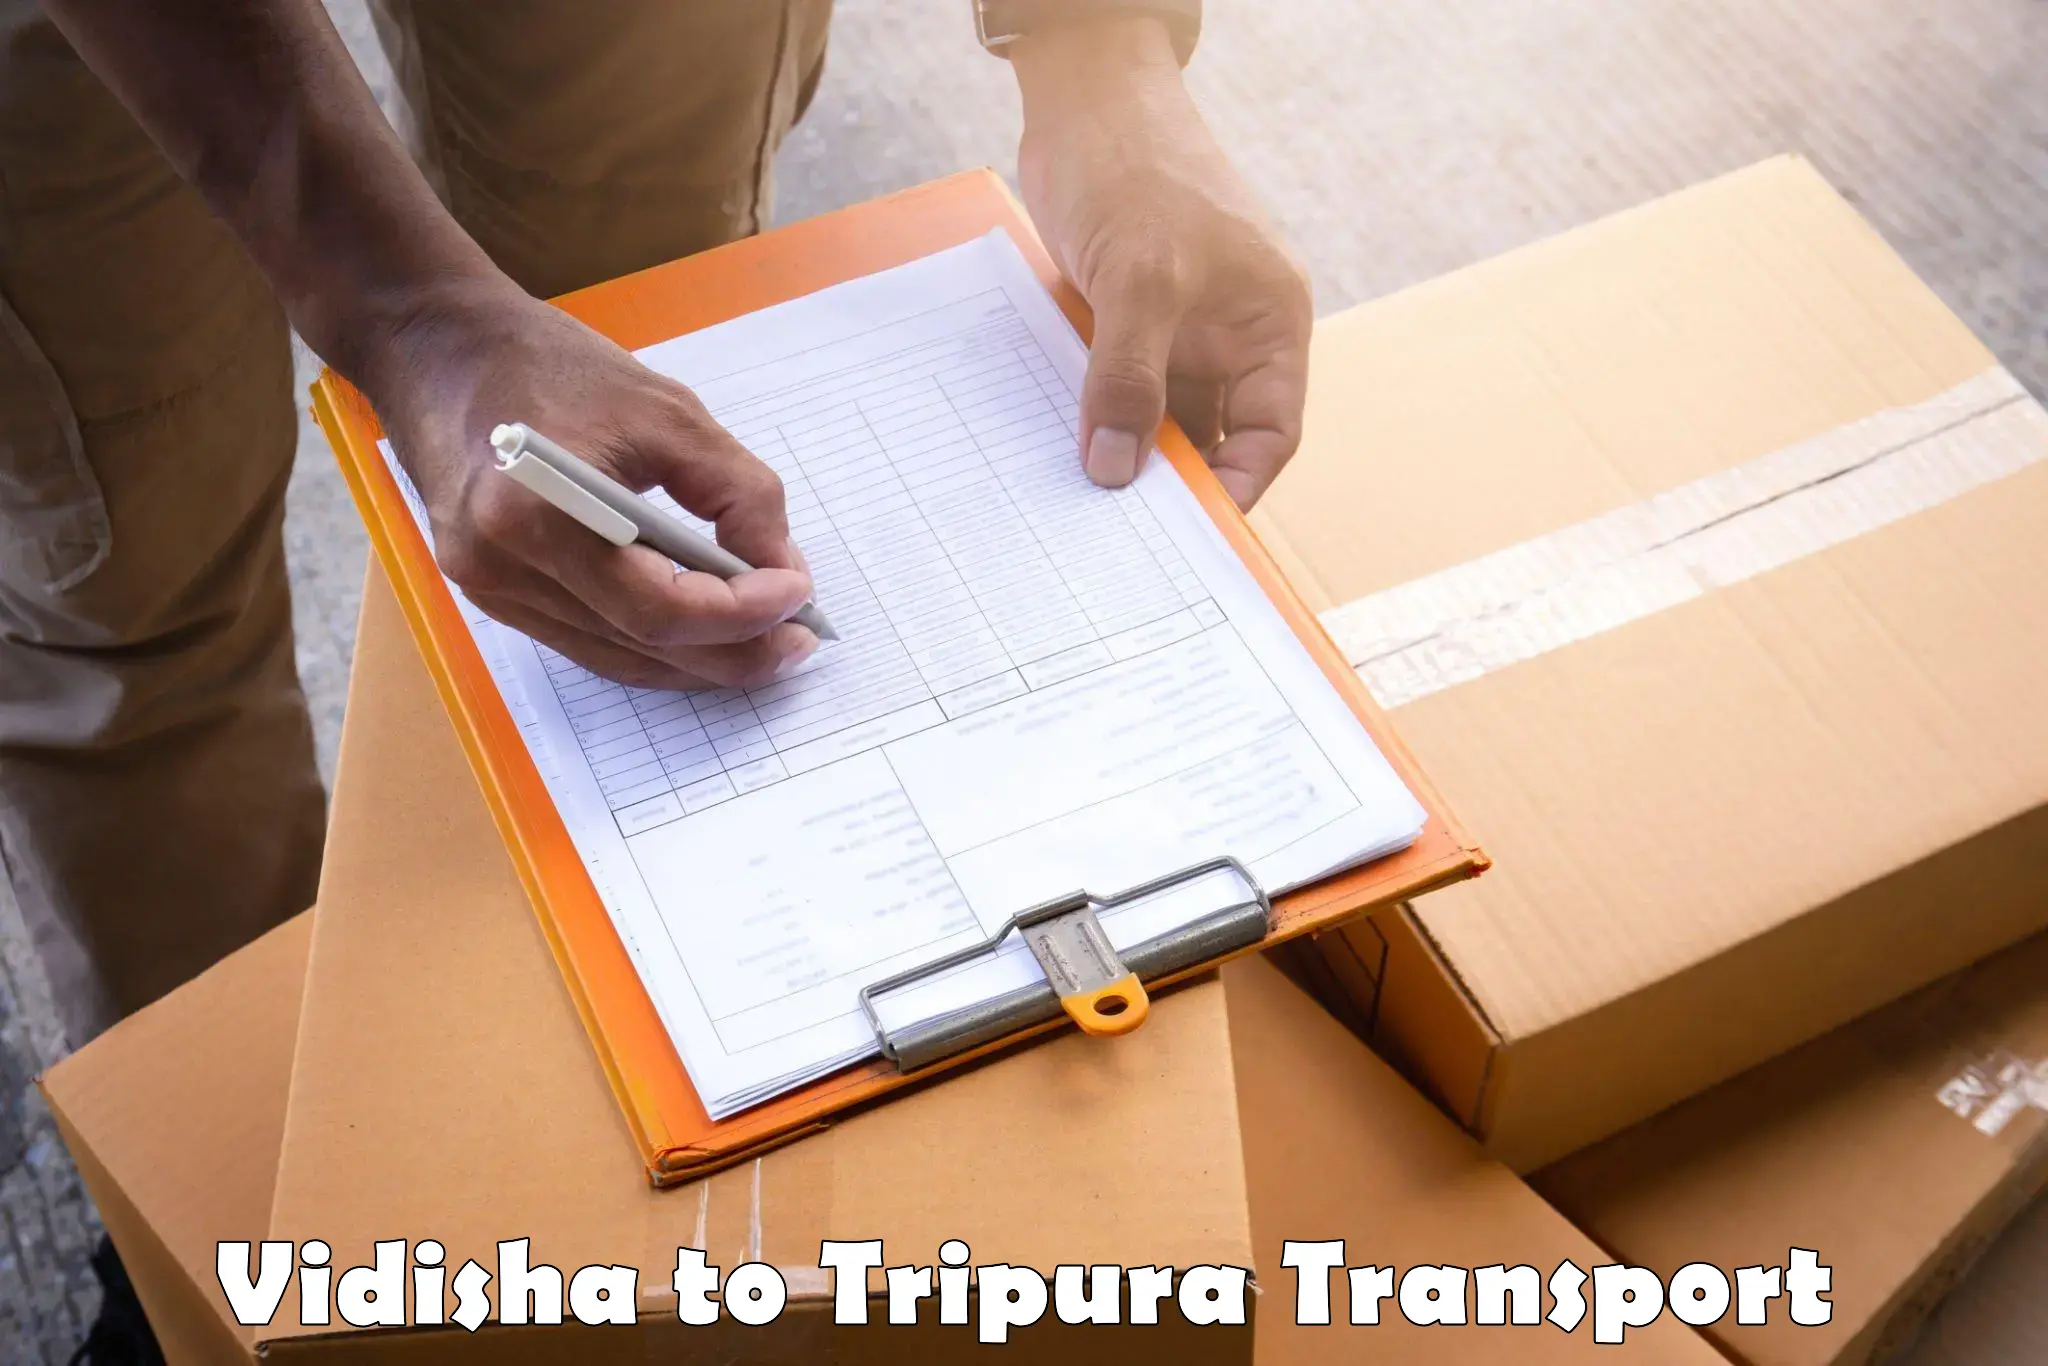 Truck transport companies in India Vidisha to Amarpur